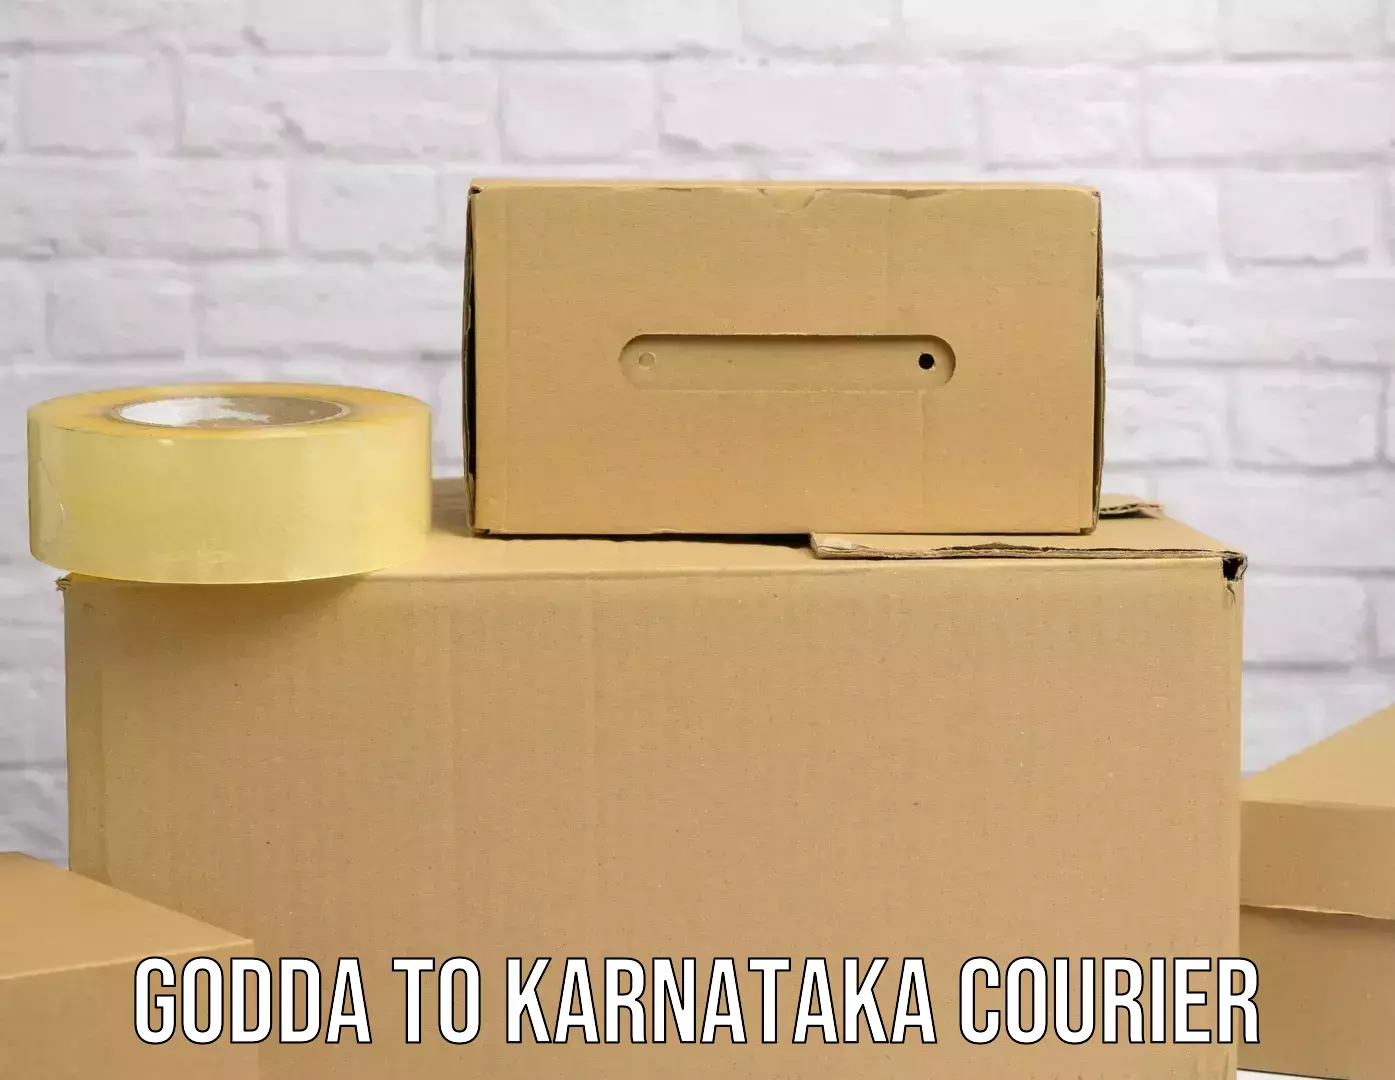 Efficient package consolidation Godda to Mudarangady